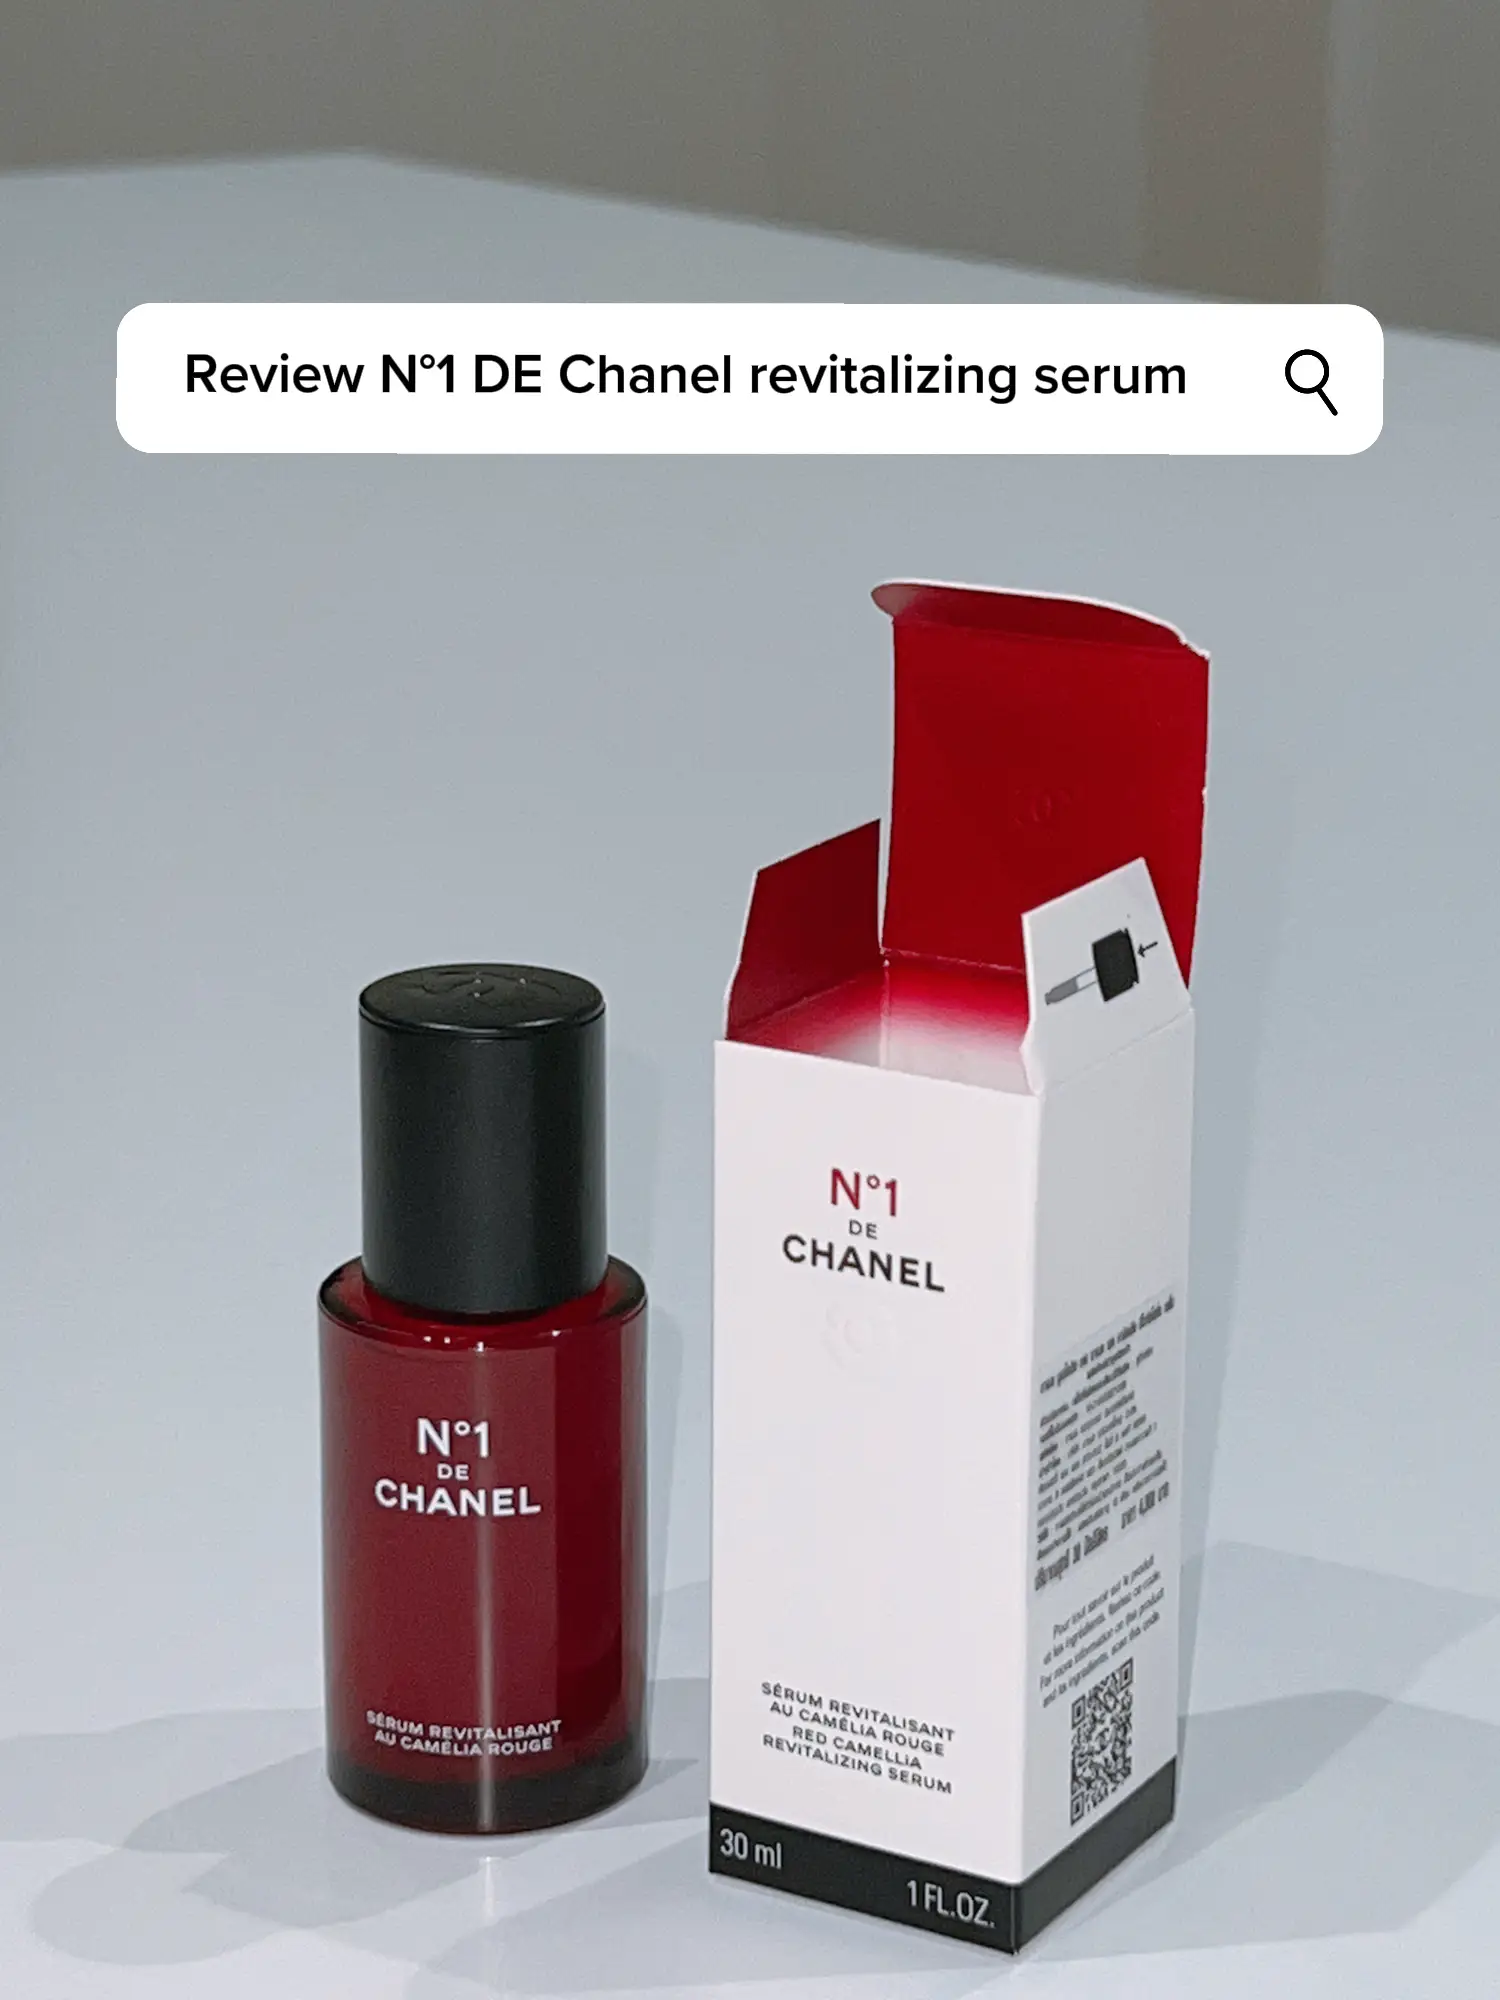 n ° 1 de chanel revitalizing serum review 🌹, Video published by Satapron